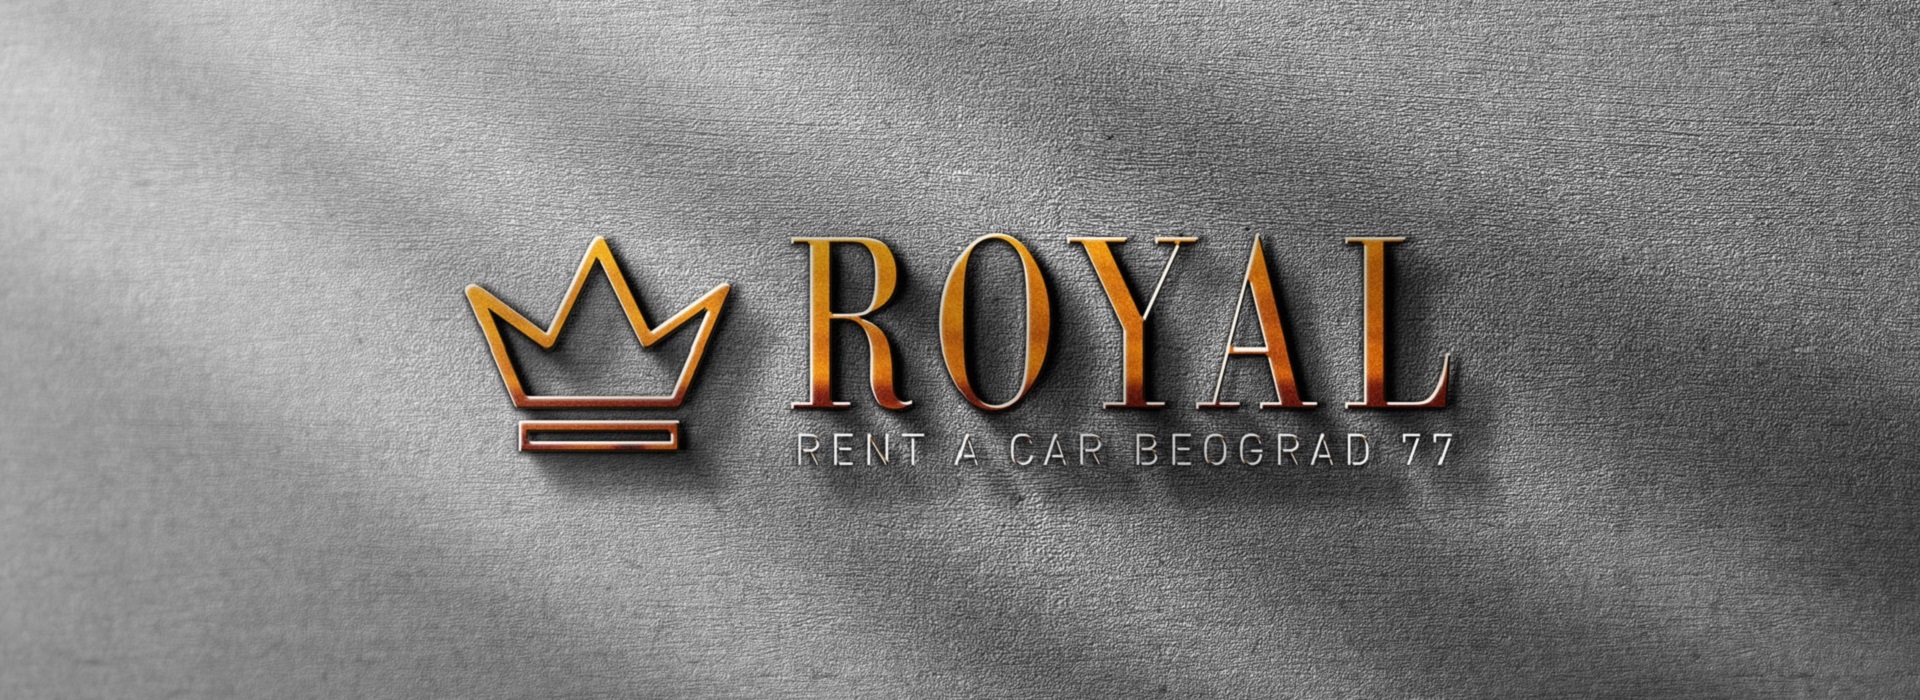 Kryogas | Car rental Beograd Royal